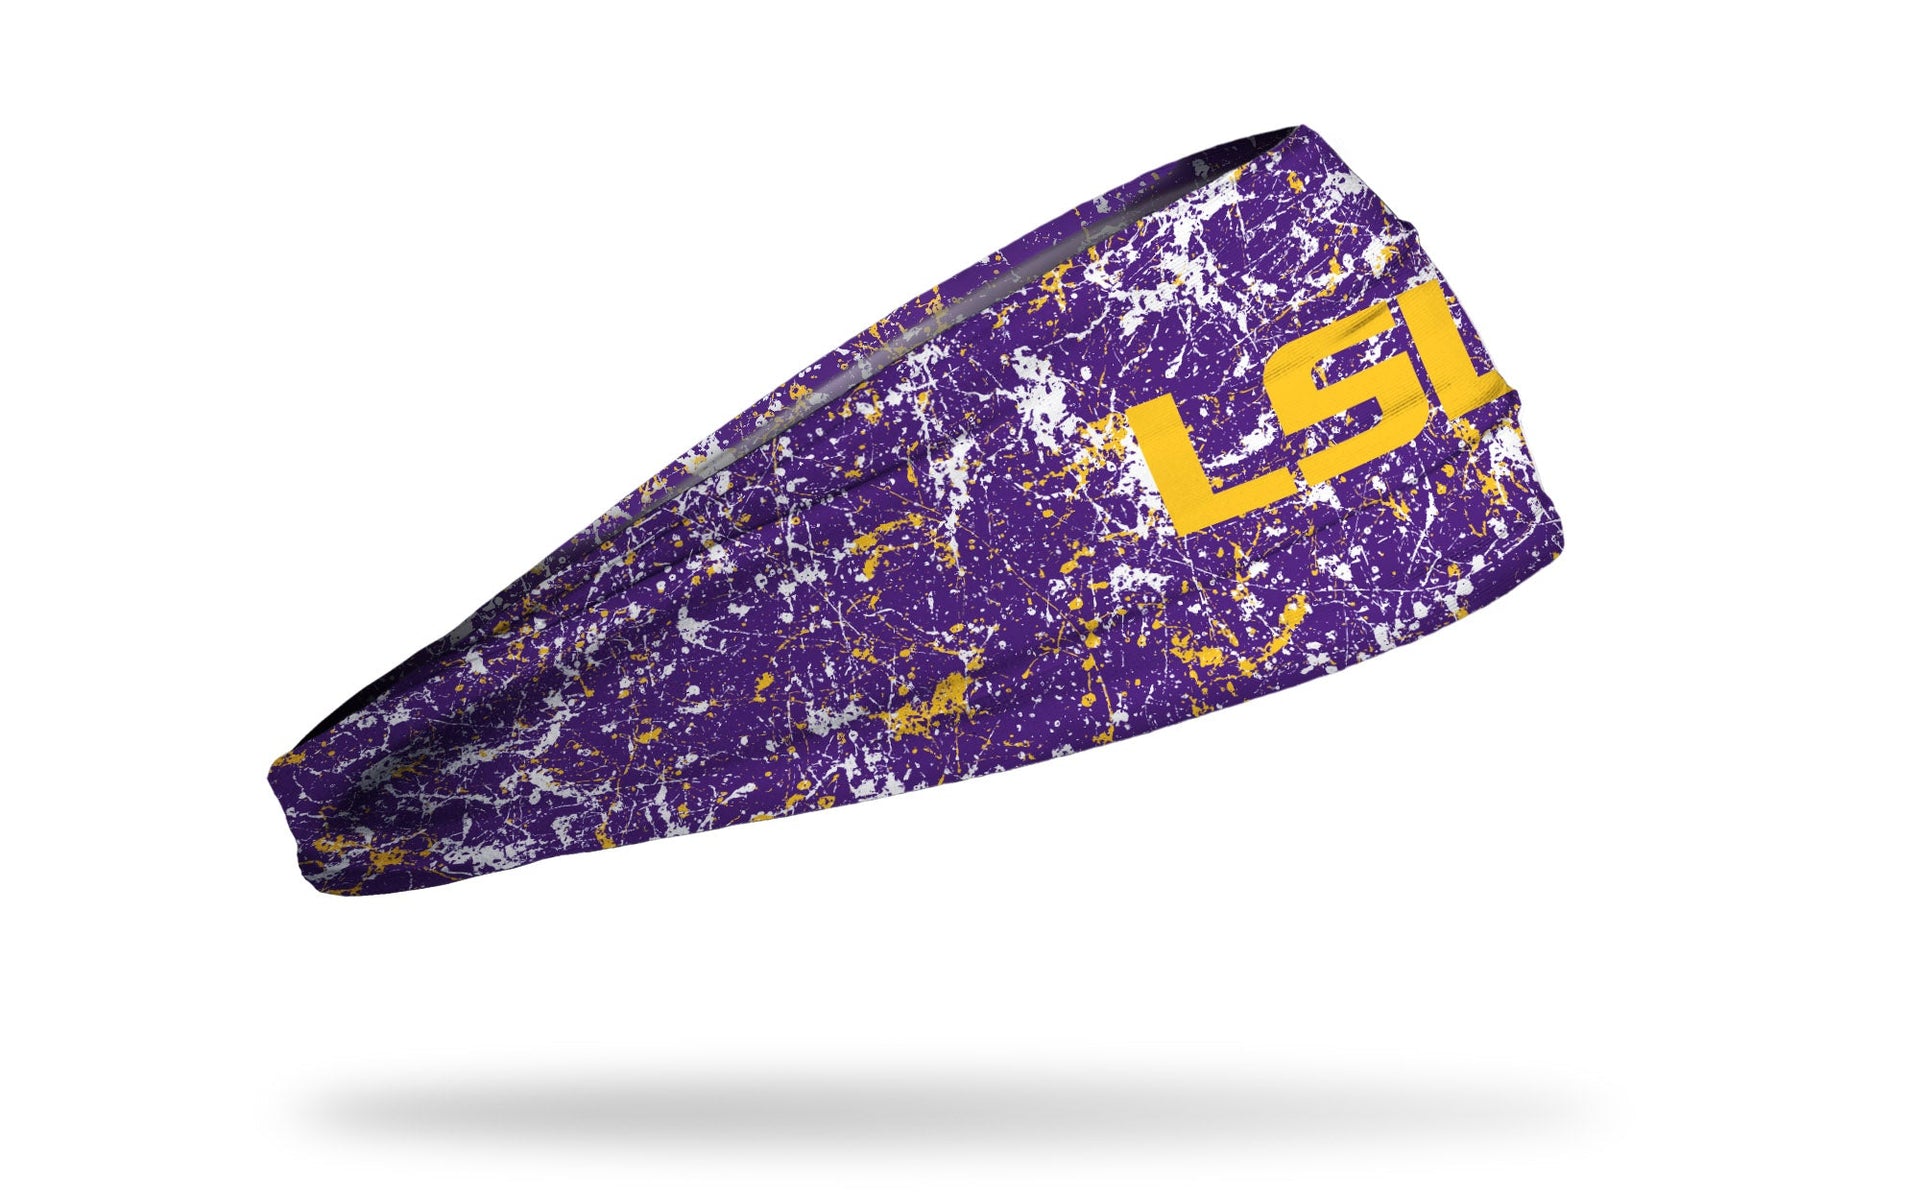 purple headband with paint splatters and Louisiana State University logo